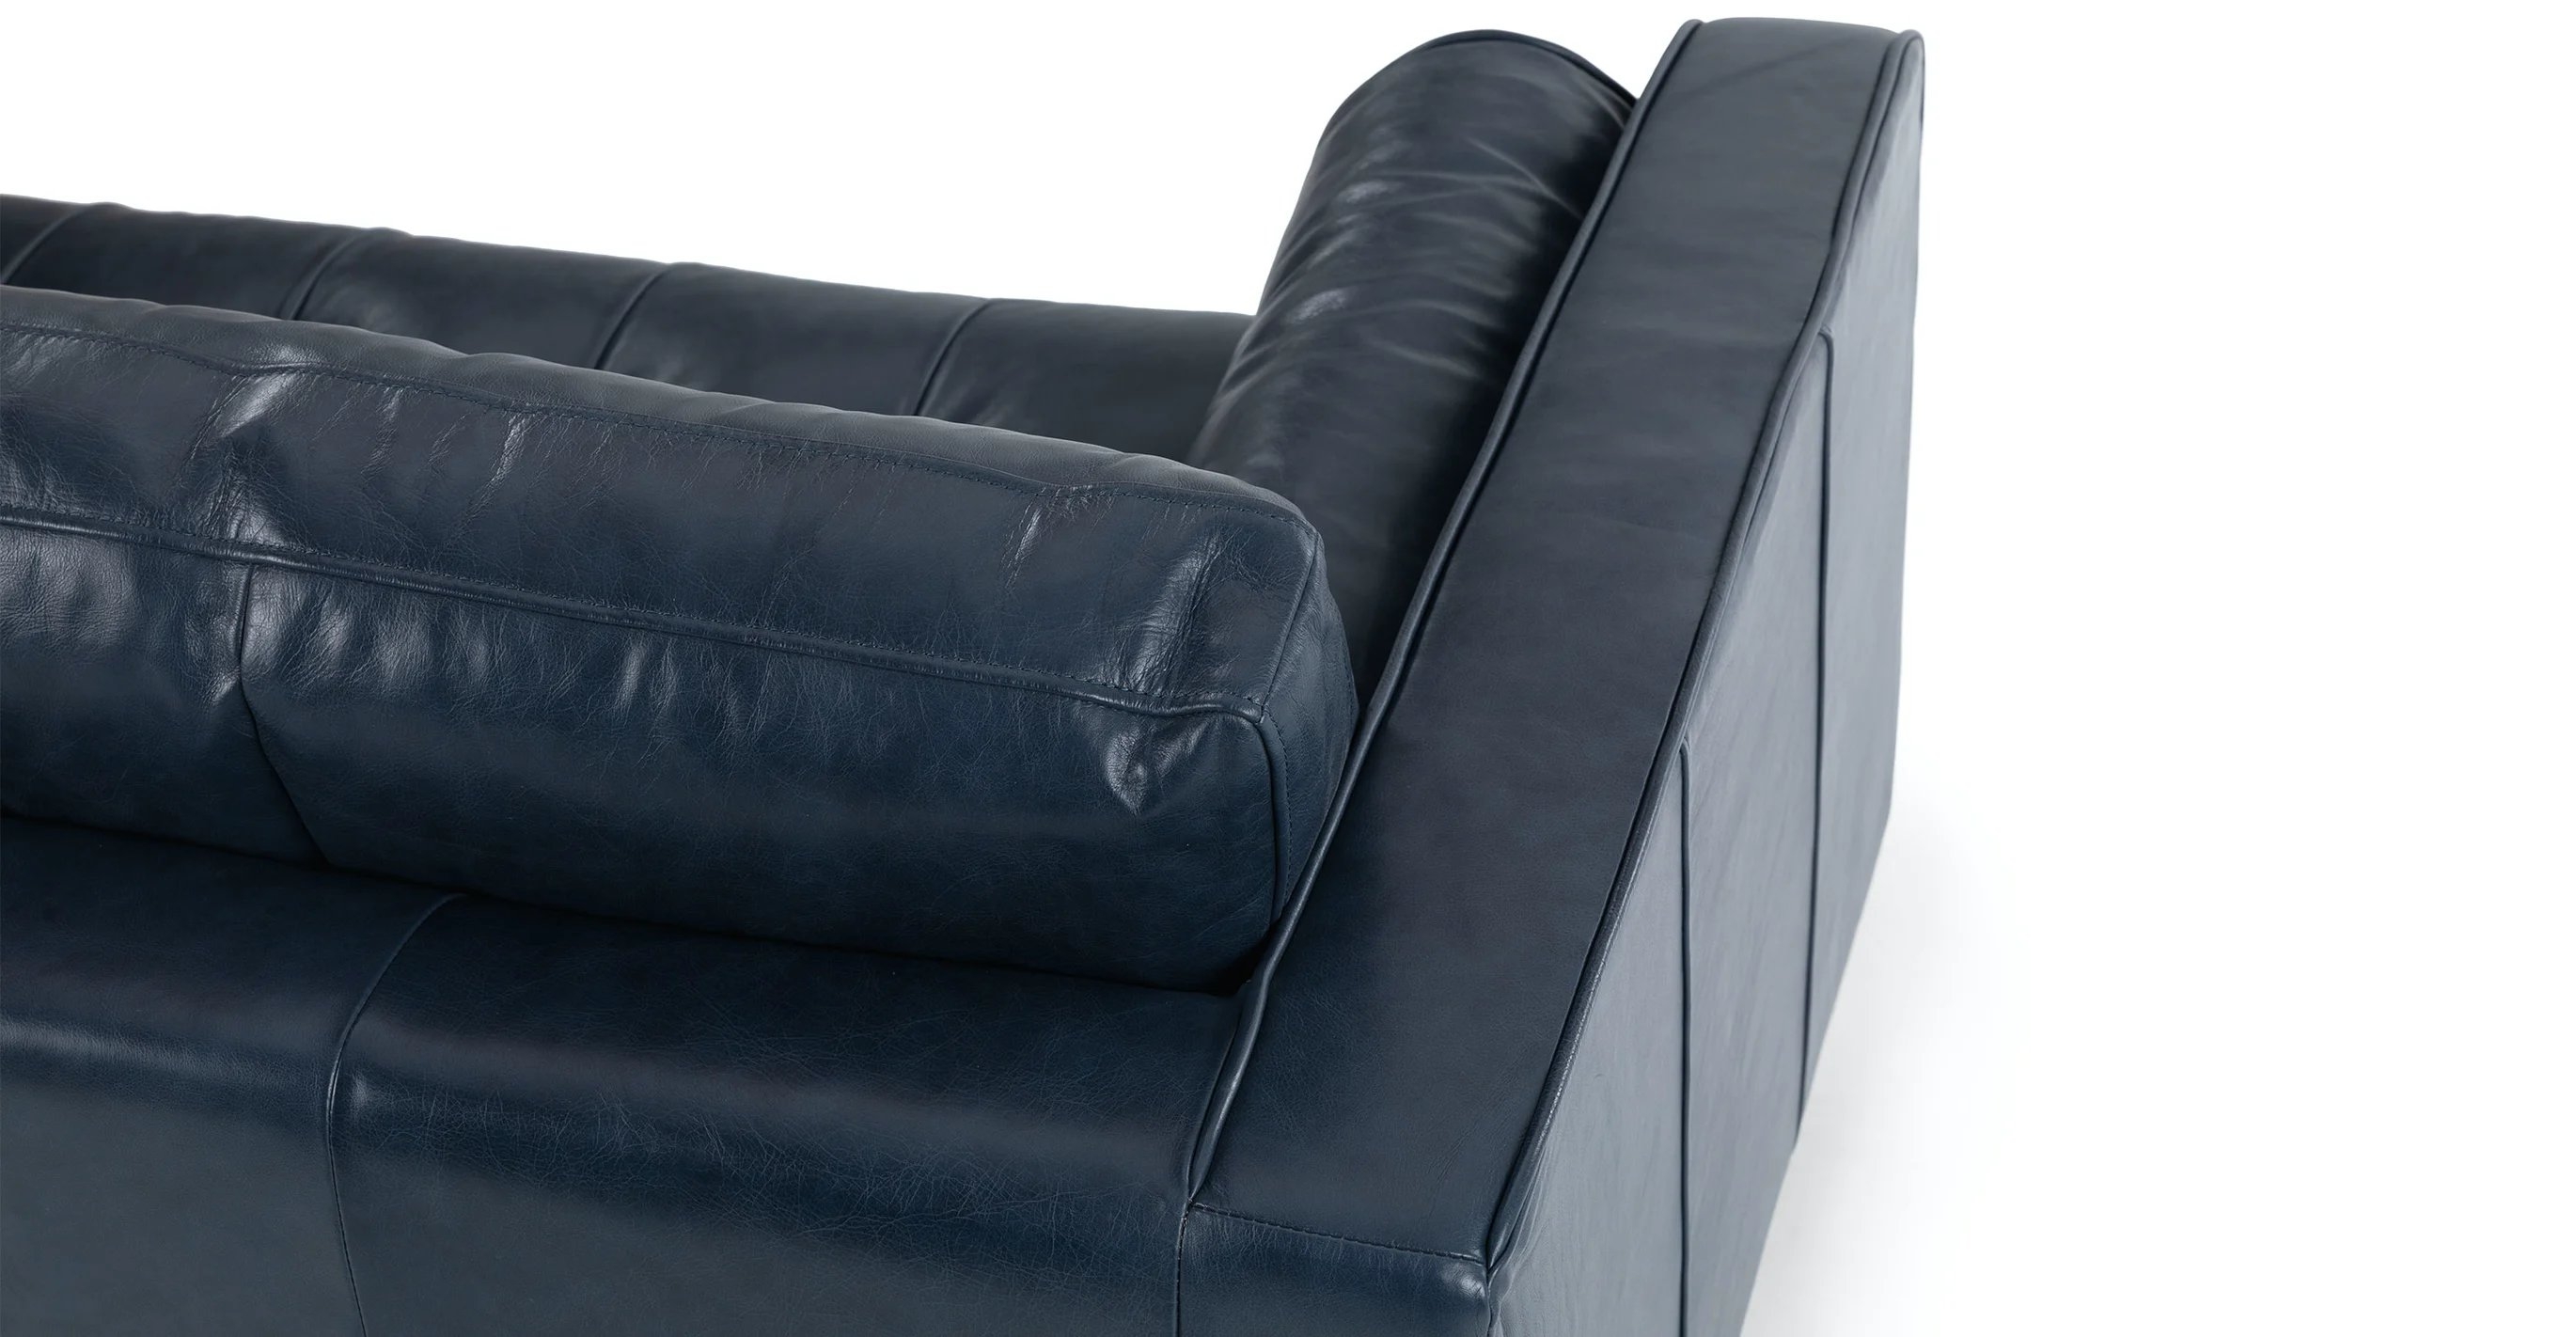 Sven 88" Tufted Leather Sofa - Oxford Blue - Image 5